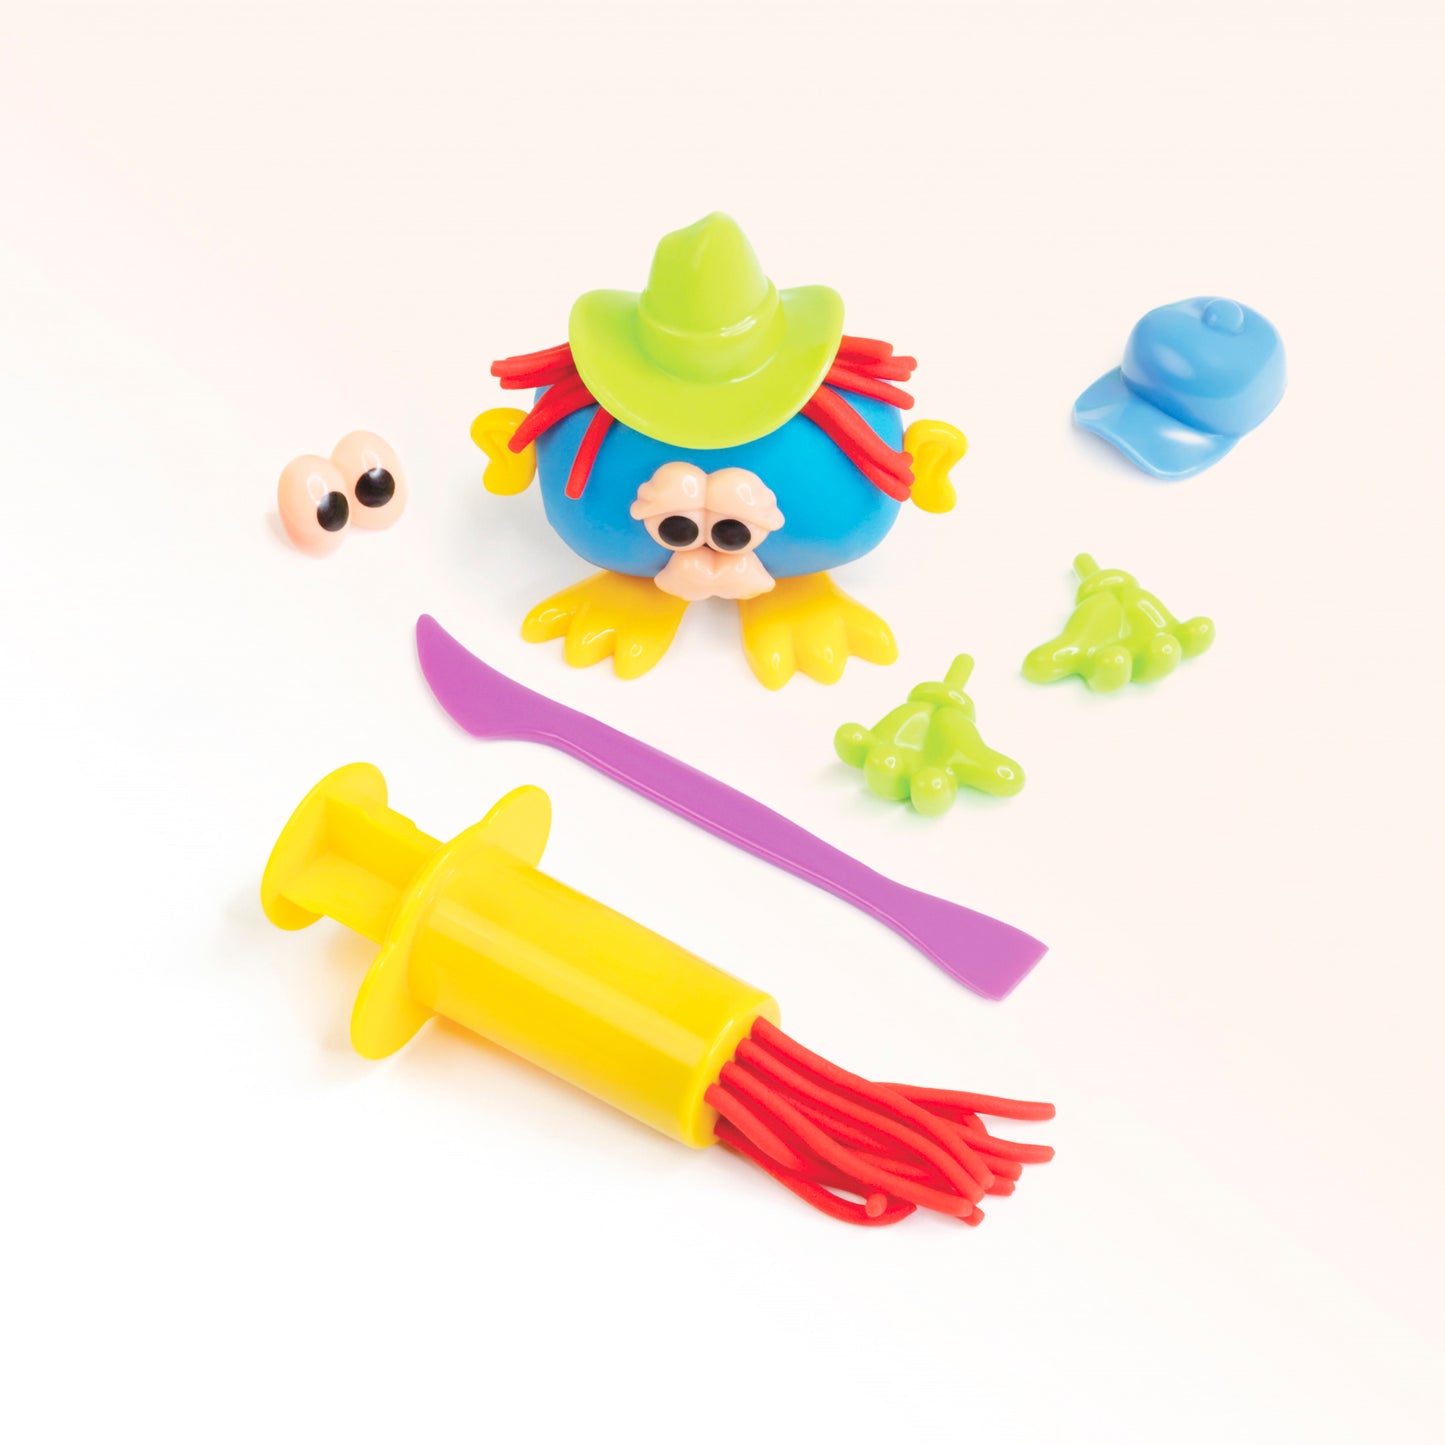 MILAN Soft Dough with Tools Happy Faces Play Dough Set - 4 Color (29 Piece) Multicolor